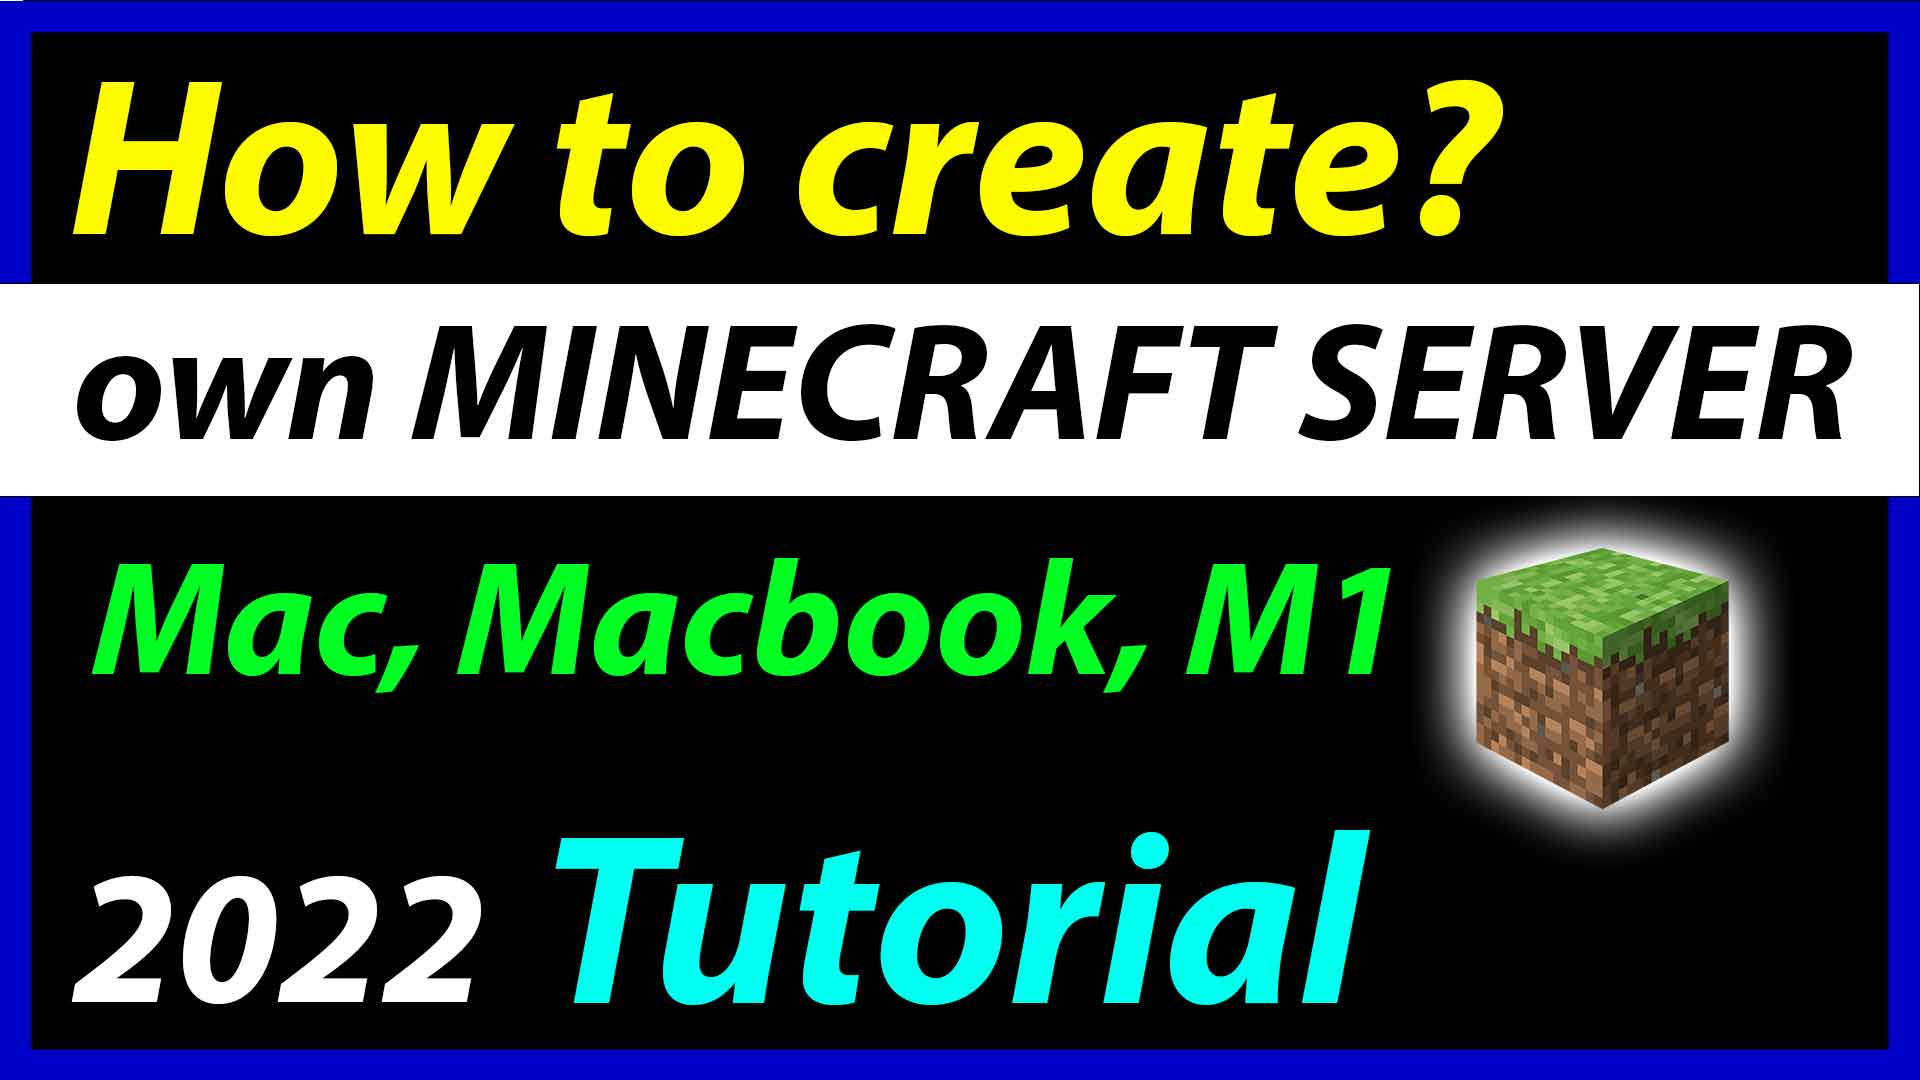 How to create Minecraft server 1.18.2 on Mac, Macbook, M1 Mac 2022